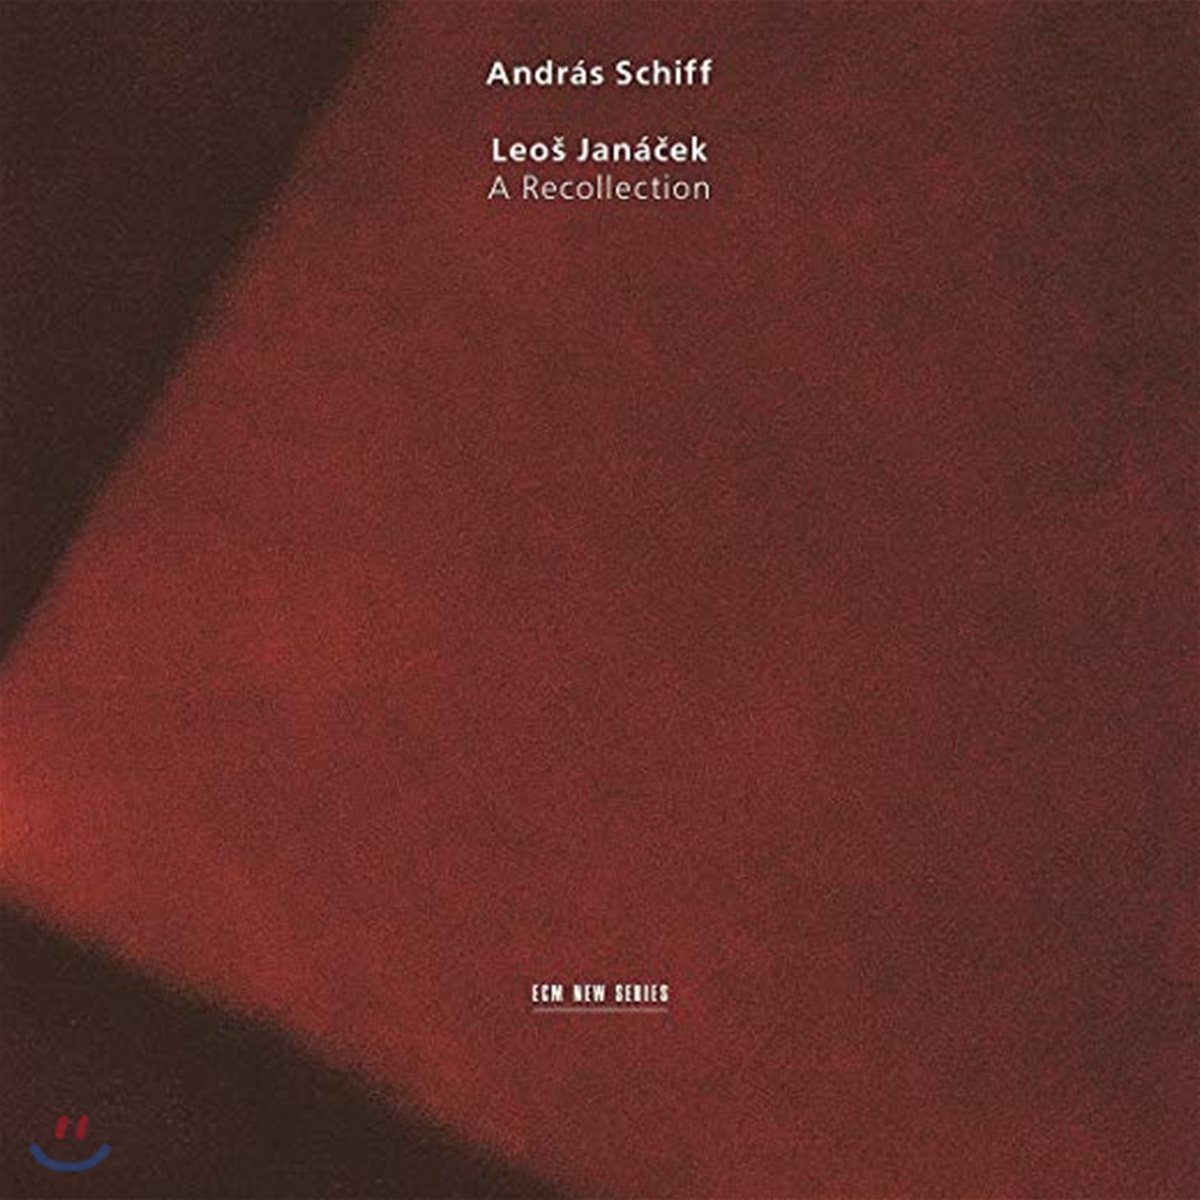 Andras Schiff 야나체크: 피아노 작품집 (Janacek: A Recollection) 안드라스 쉬프